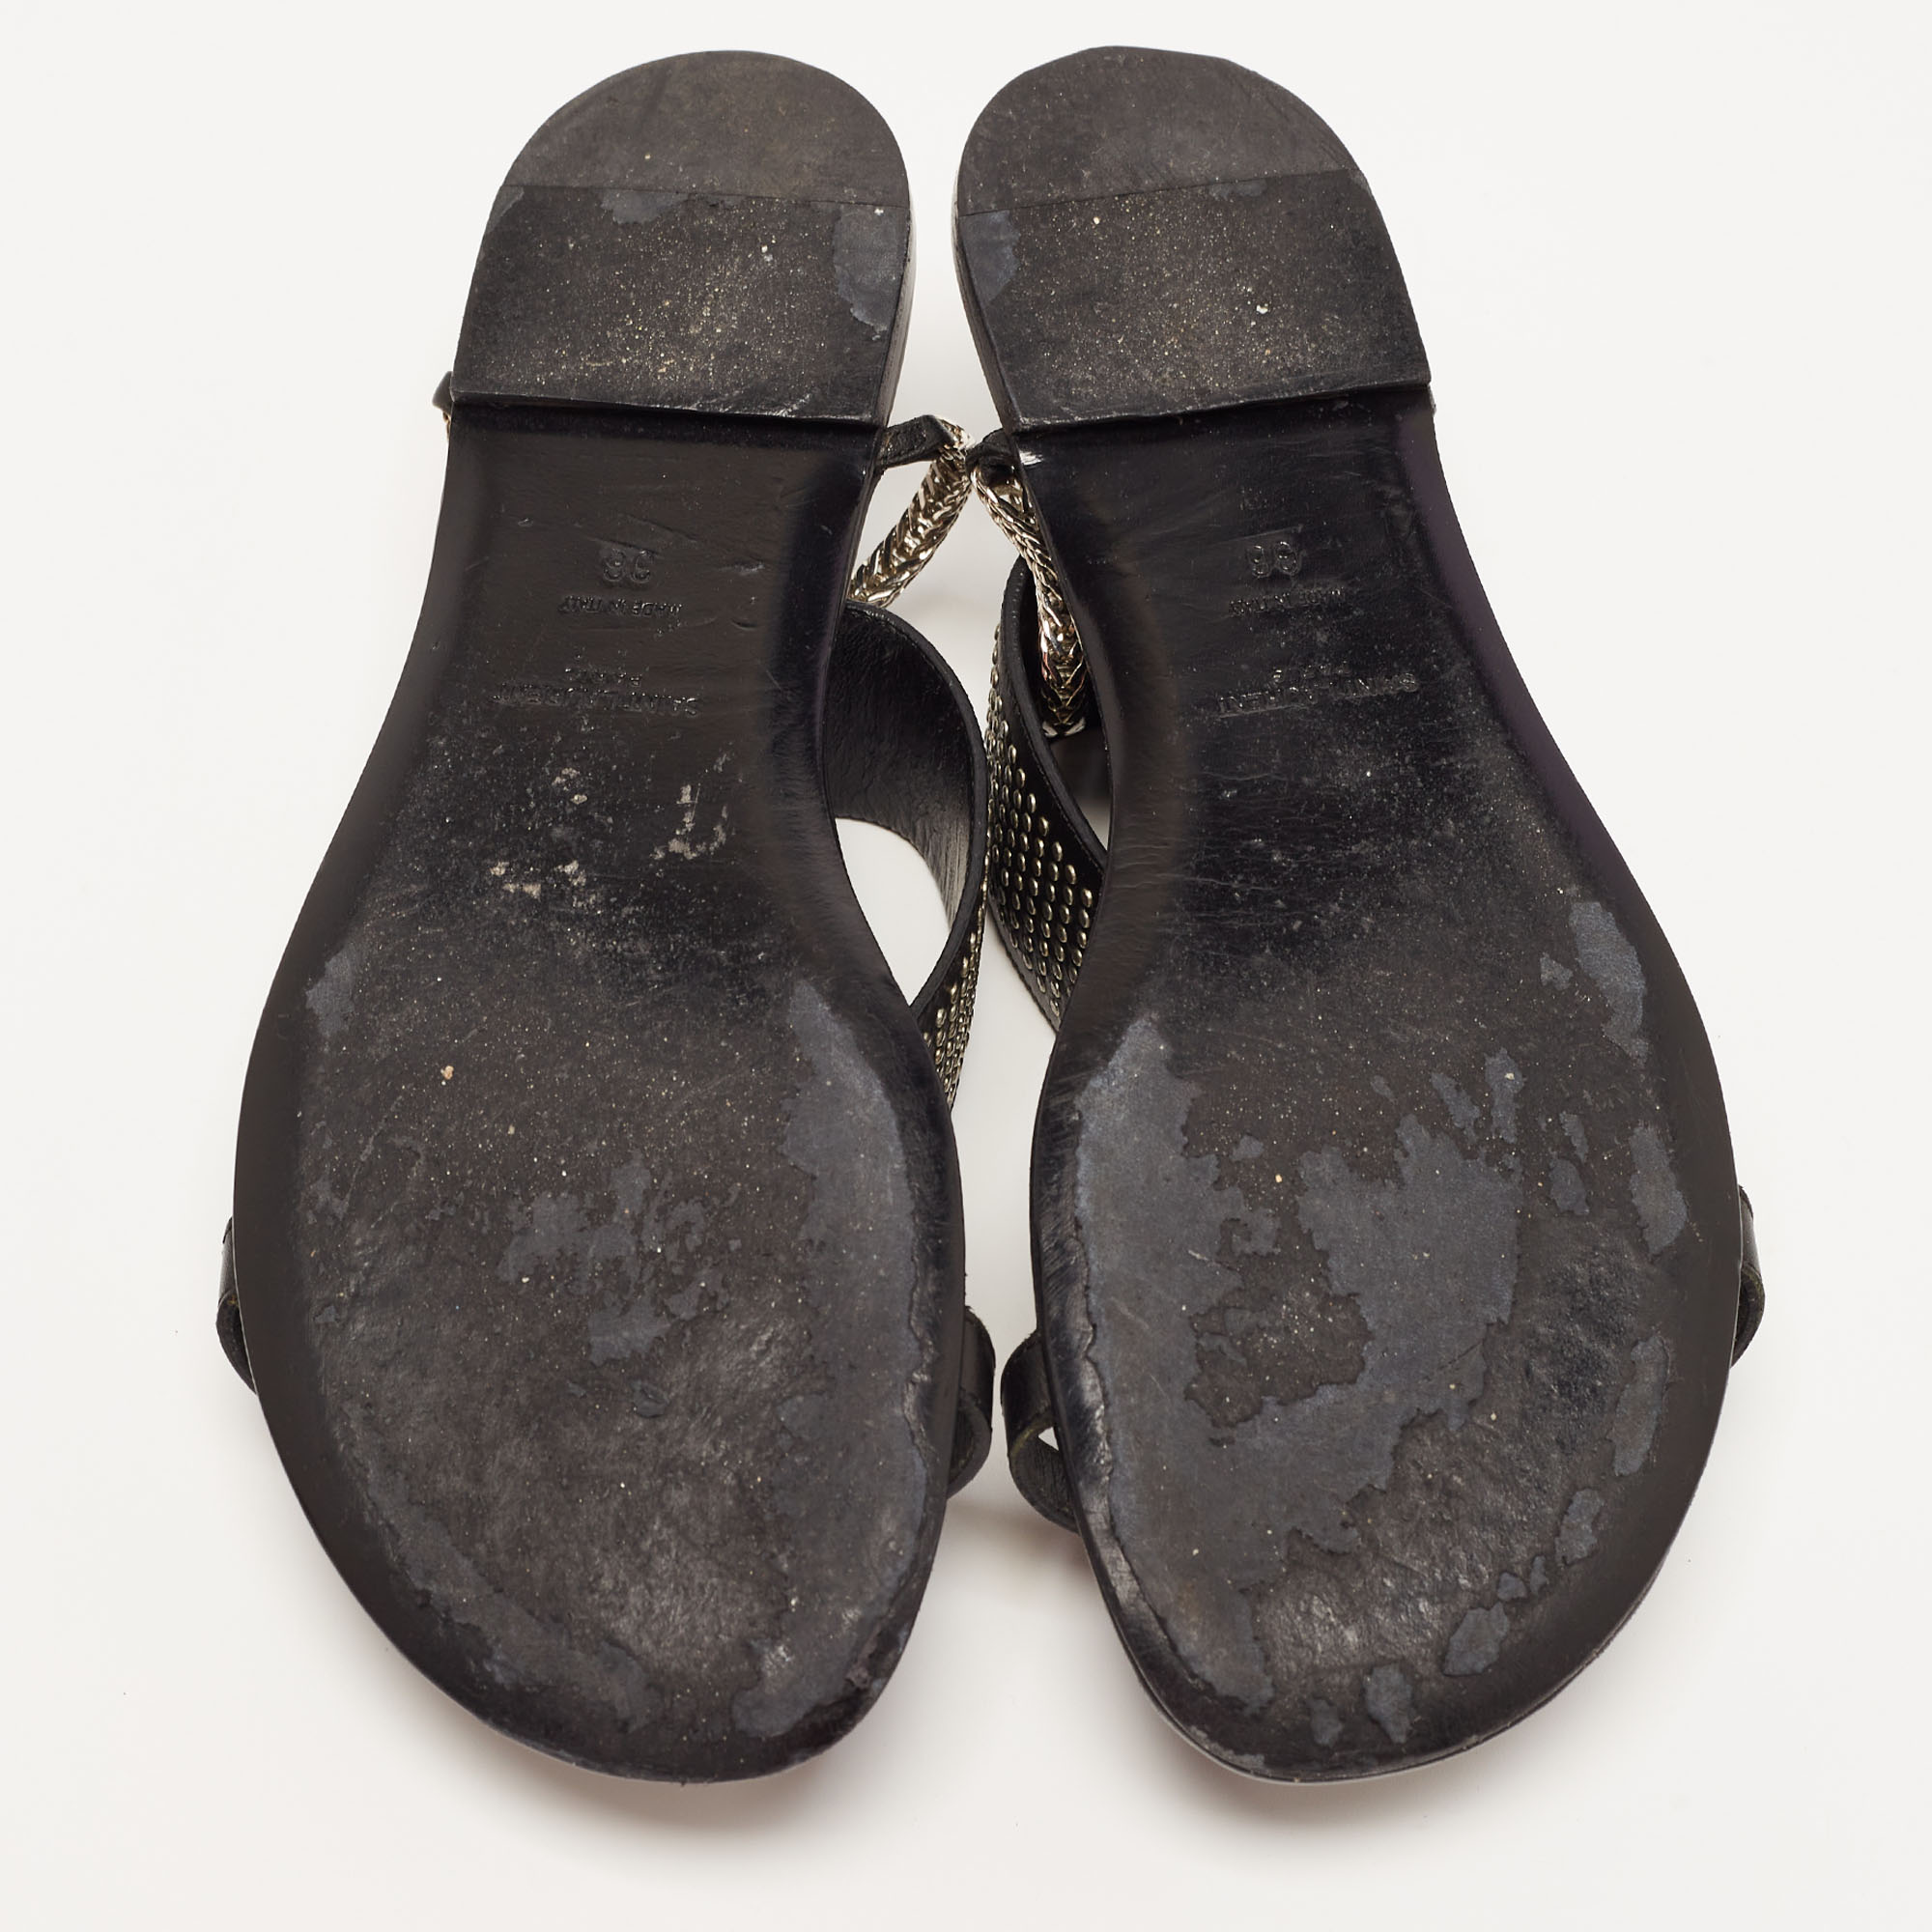 Saint Laurent Black Leather Studded Ankle Cuff Flat Sandals Size 36